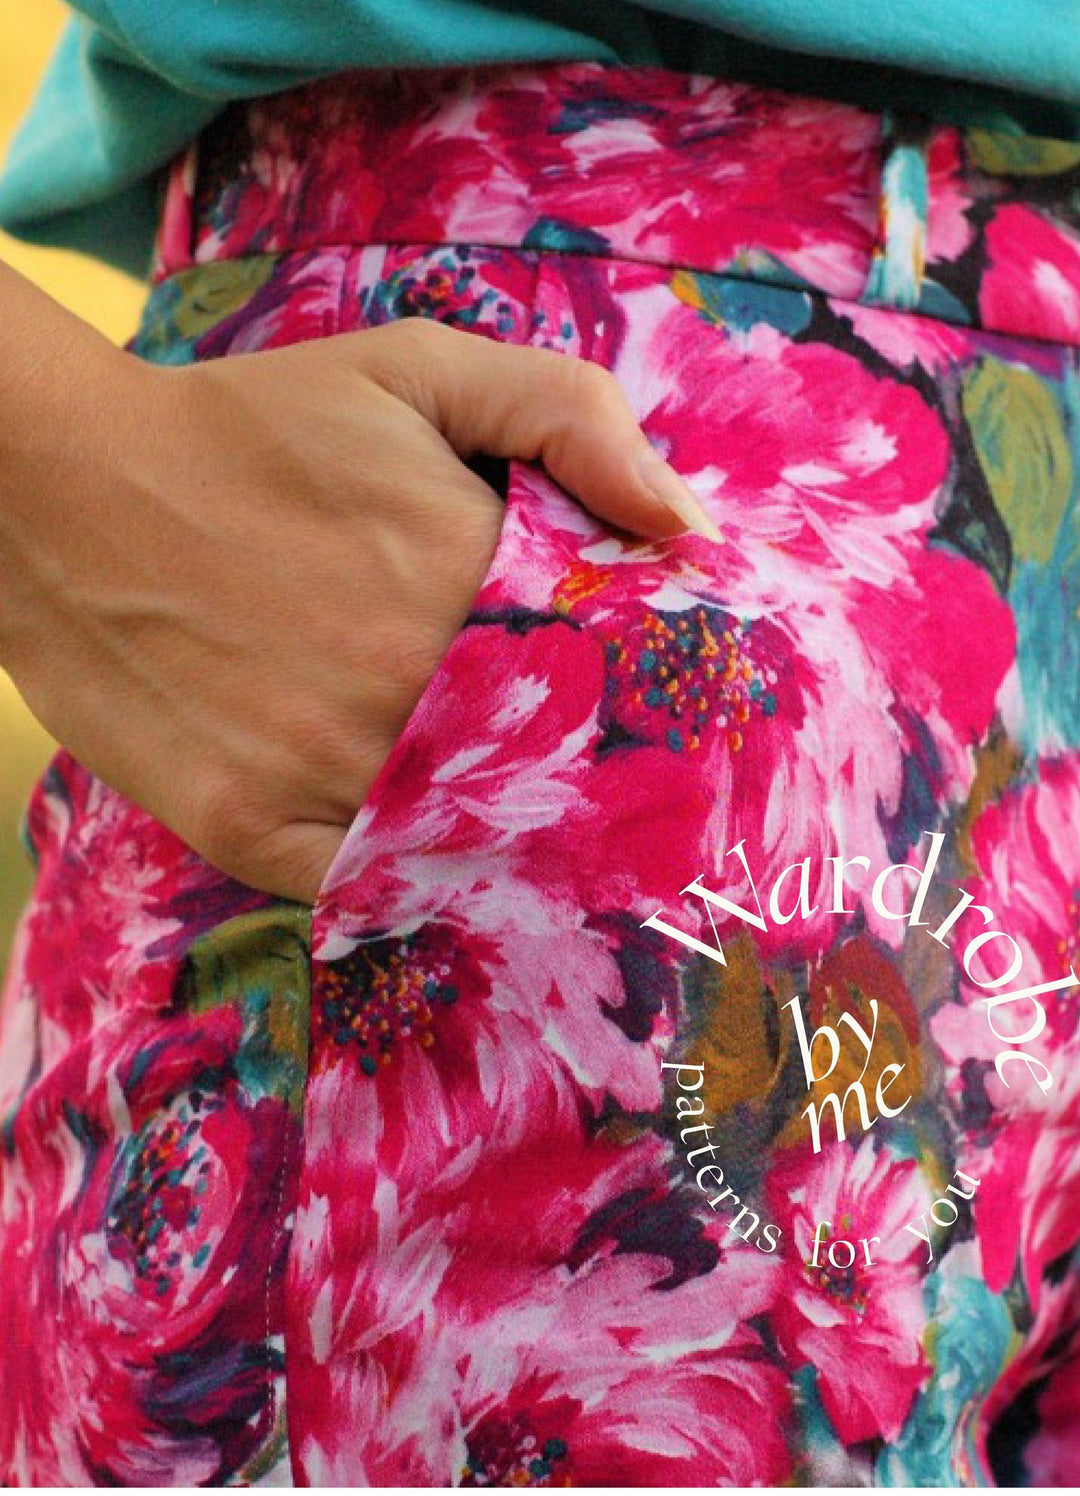 Women's chino pants sewing pattern - Wardrobe By Me